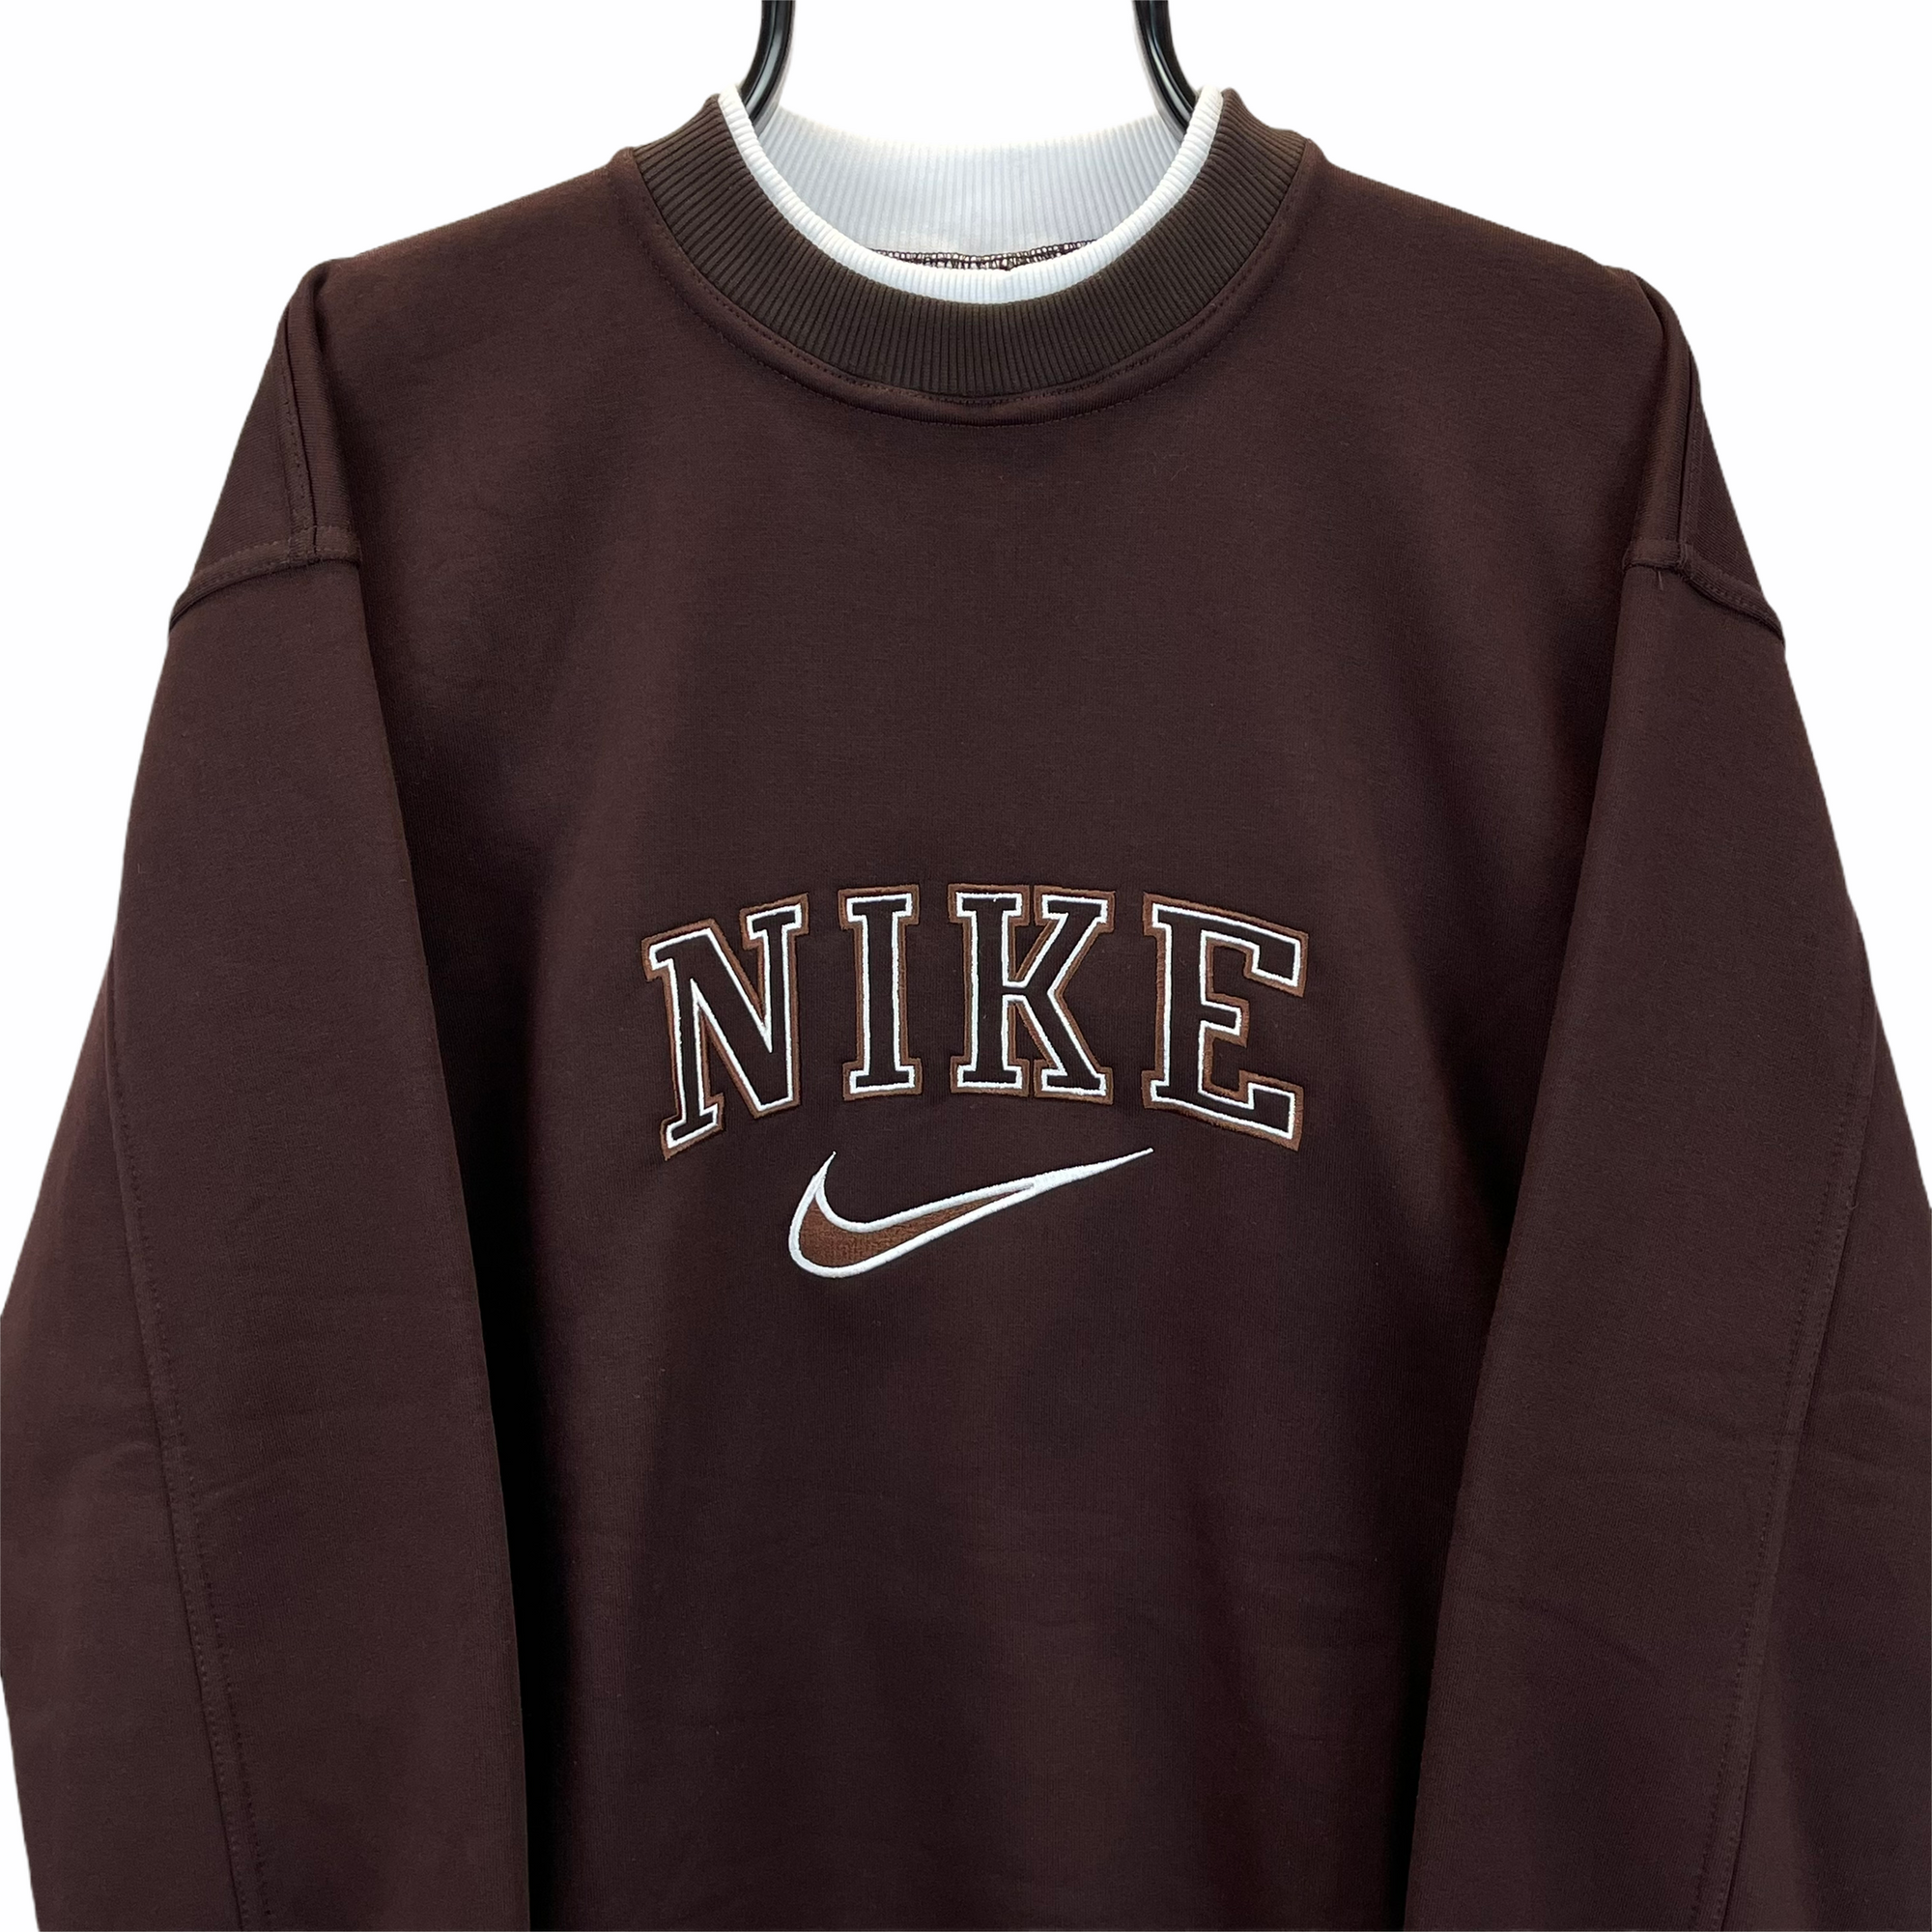 Nike Spellout Sweatshirt in Brown - Men's Large/Women's XL